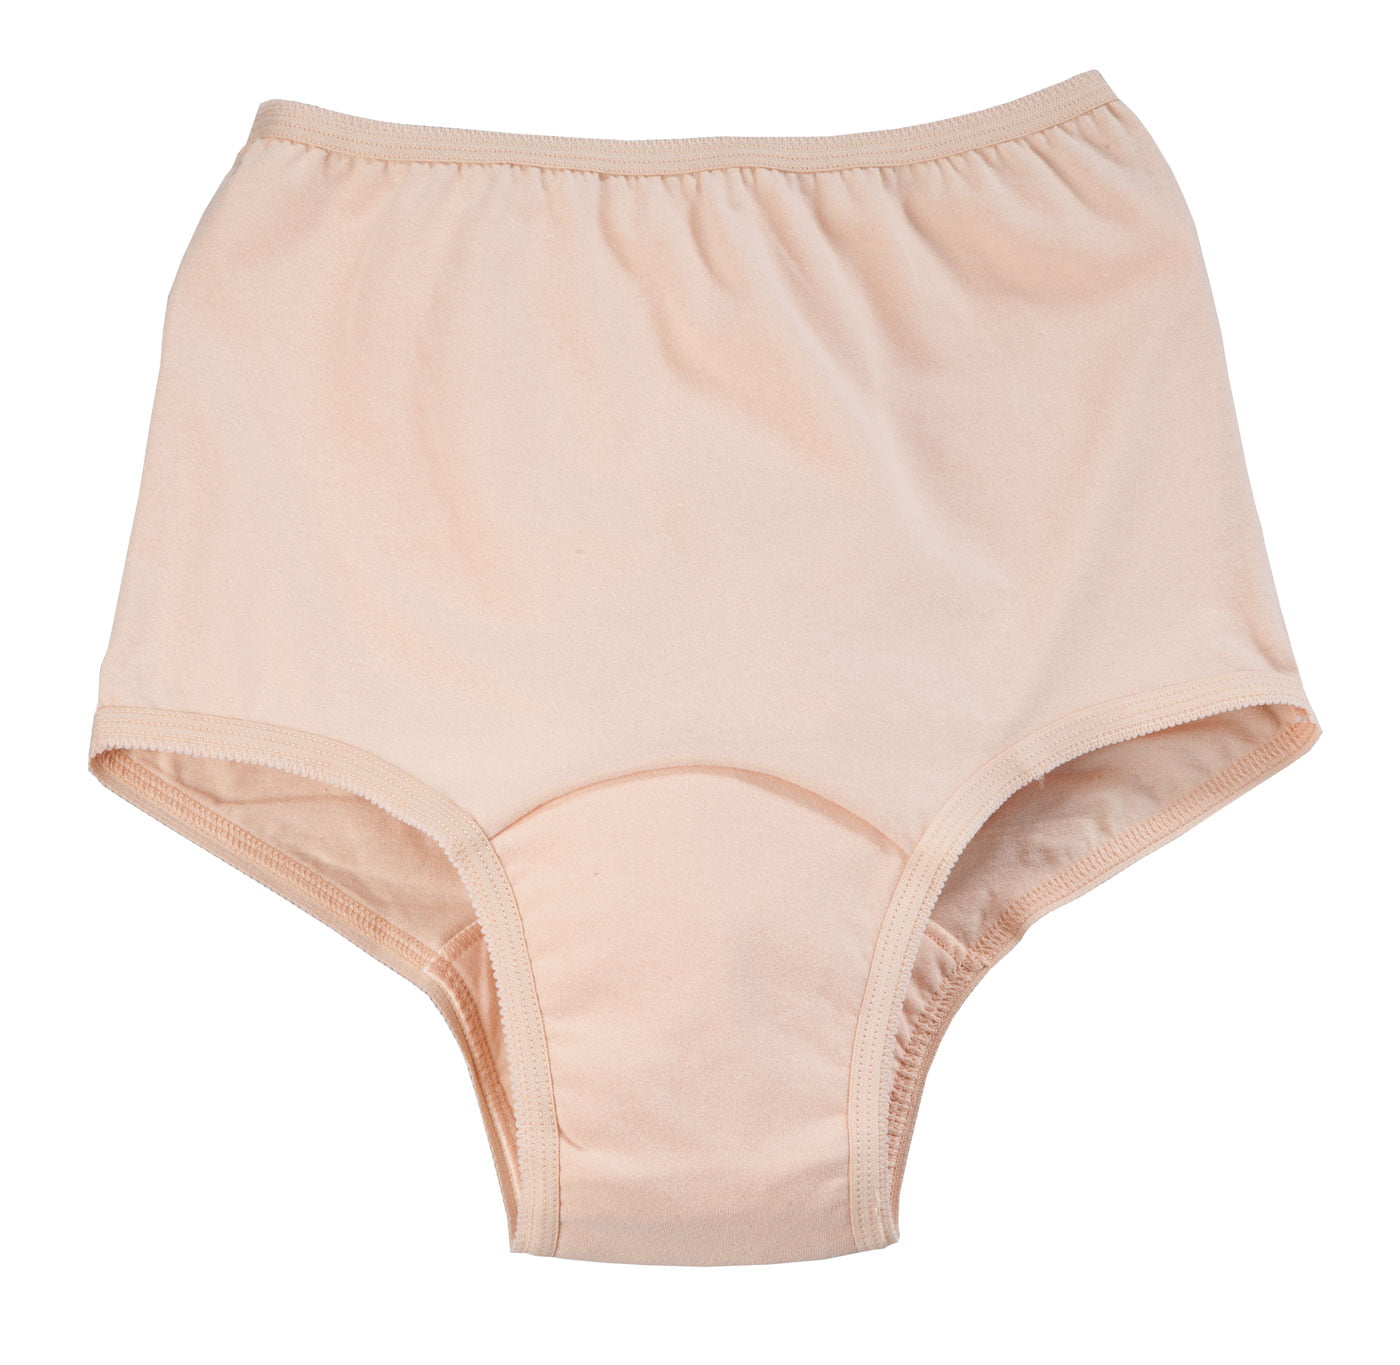 Wearever 1 Pack Women S Cotton Comfort Incontinence Panties Washable Reusable Bladder